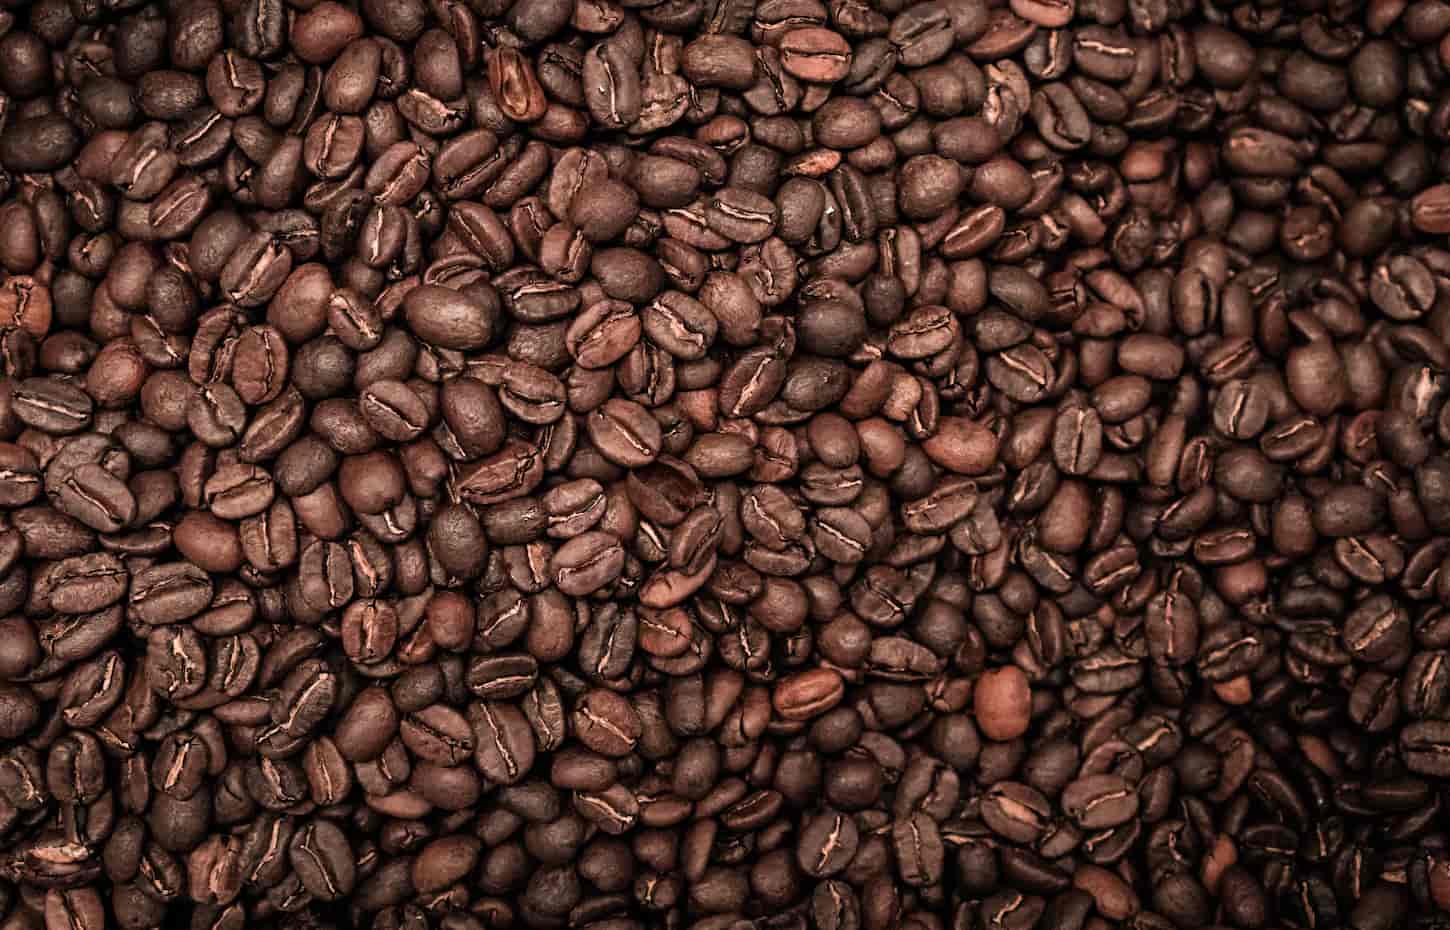 An image of dark, fresh coffee beans.